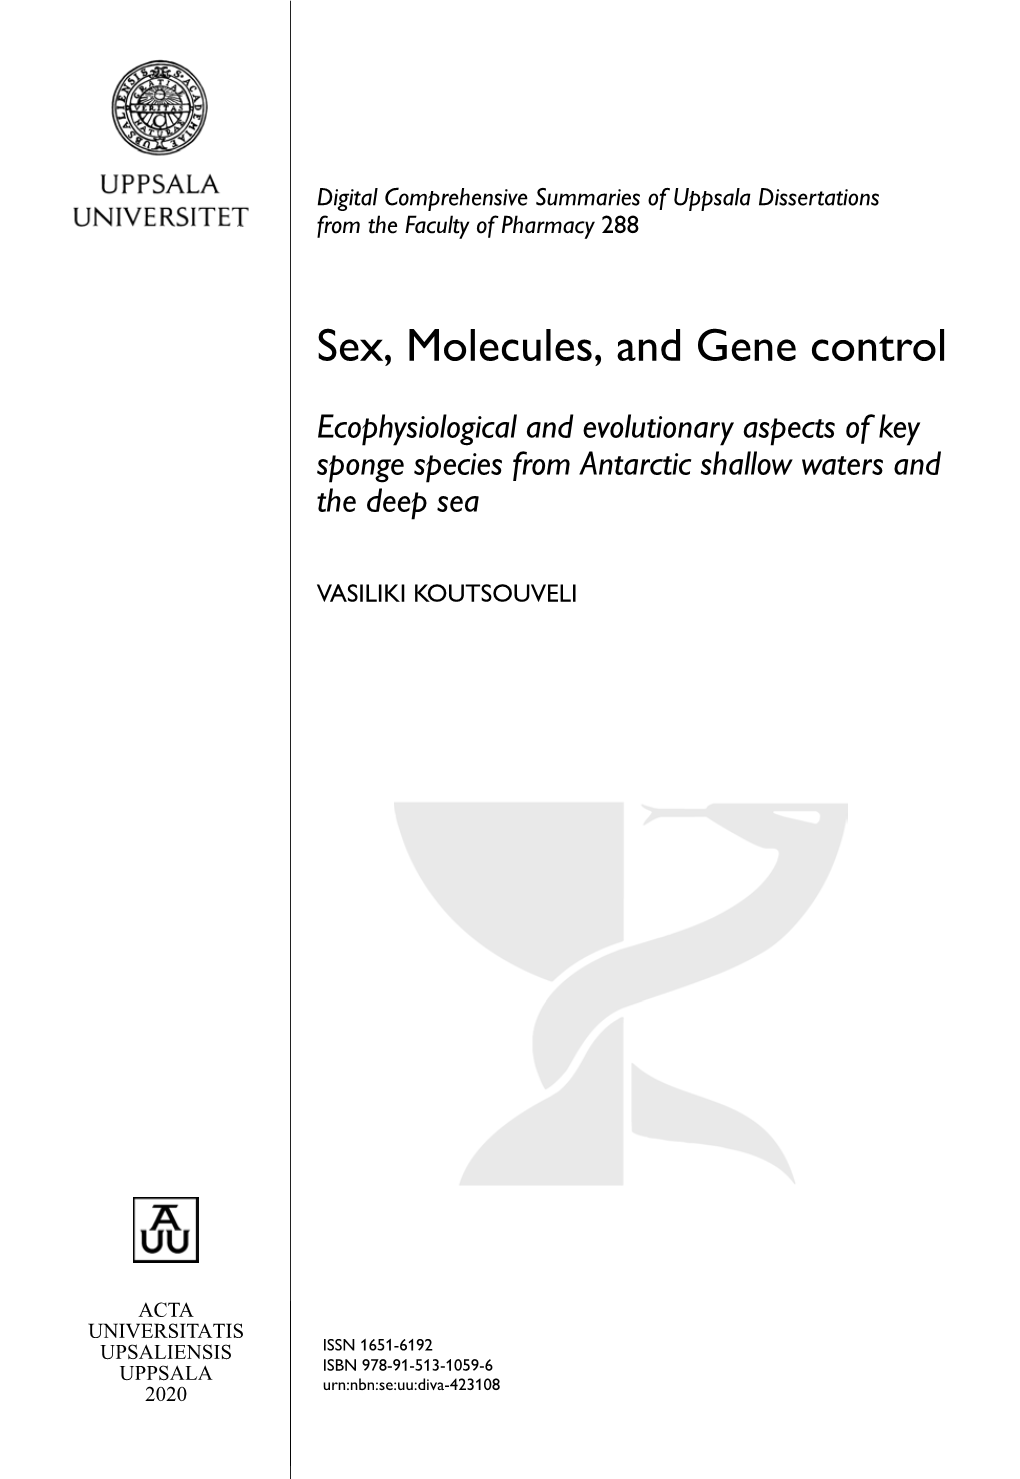 Sex, Molecules, and Gene Control